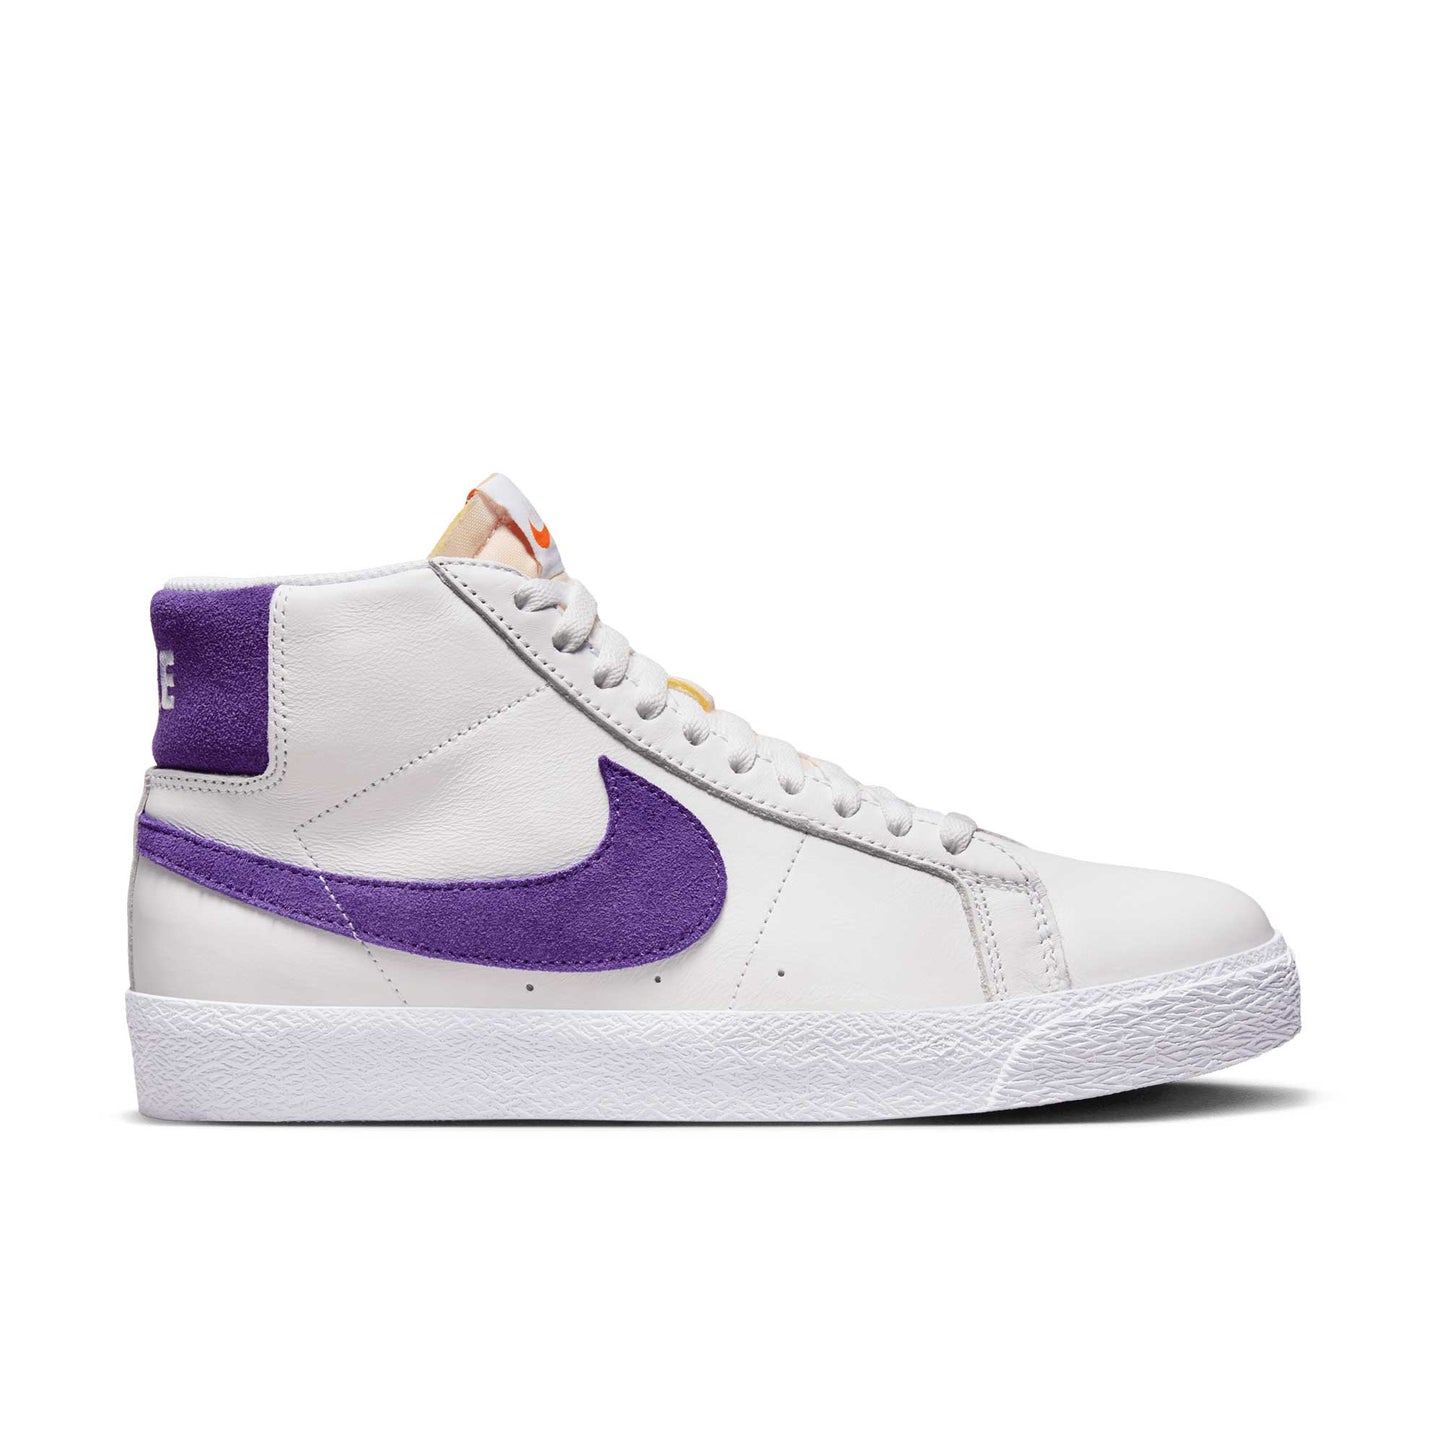 Nike SB Zoom Blazer Mid, white/court purple-white-gum light brown - Tiki Room Skateboards - 8